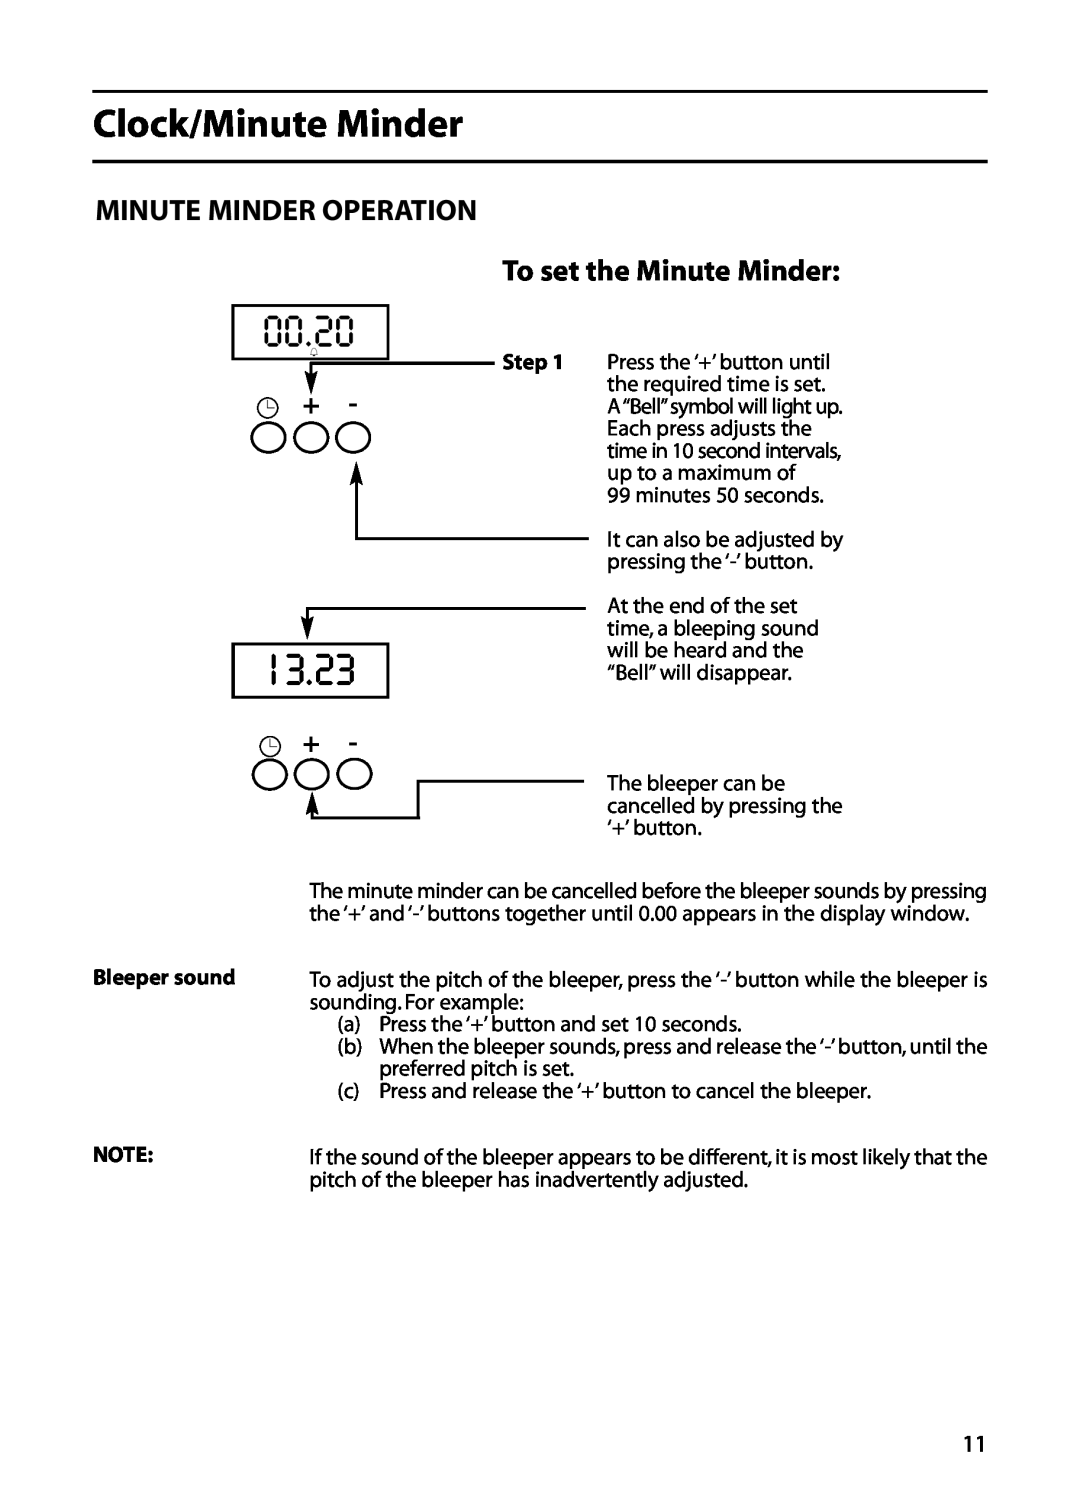 Indesit KD6E35W manual 00.20, 13.23, MINUTE MINDER OPERATION To set the Minute Minder, Clock/Minute Minder, Bleeper sound 